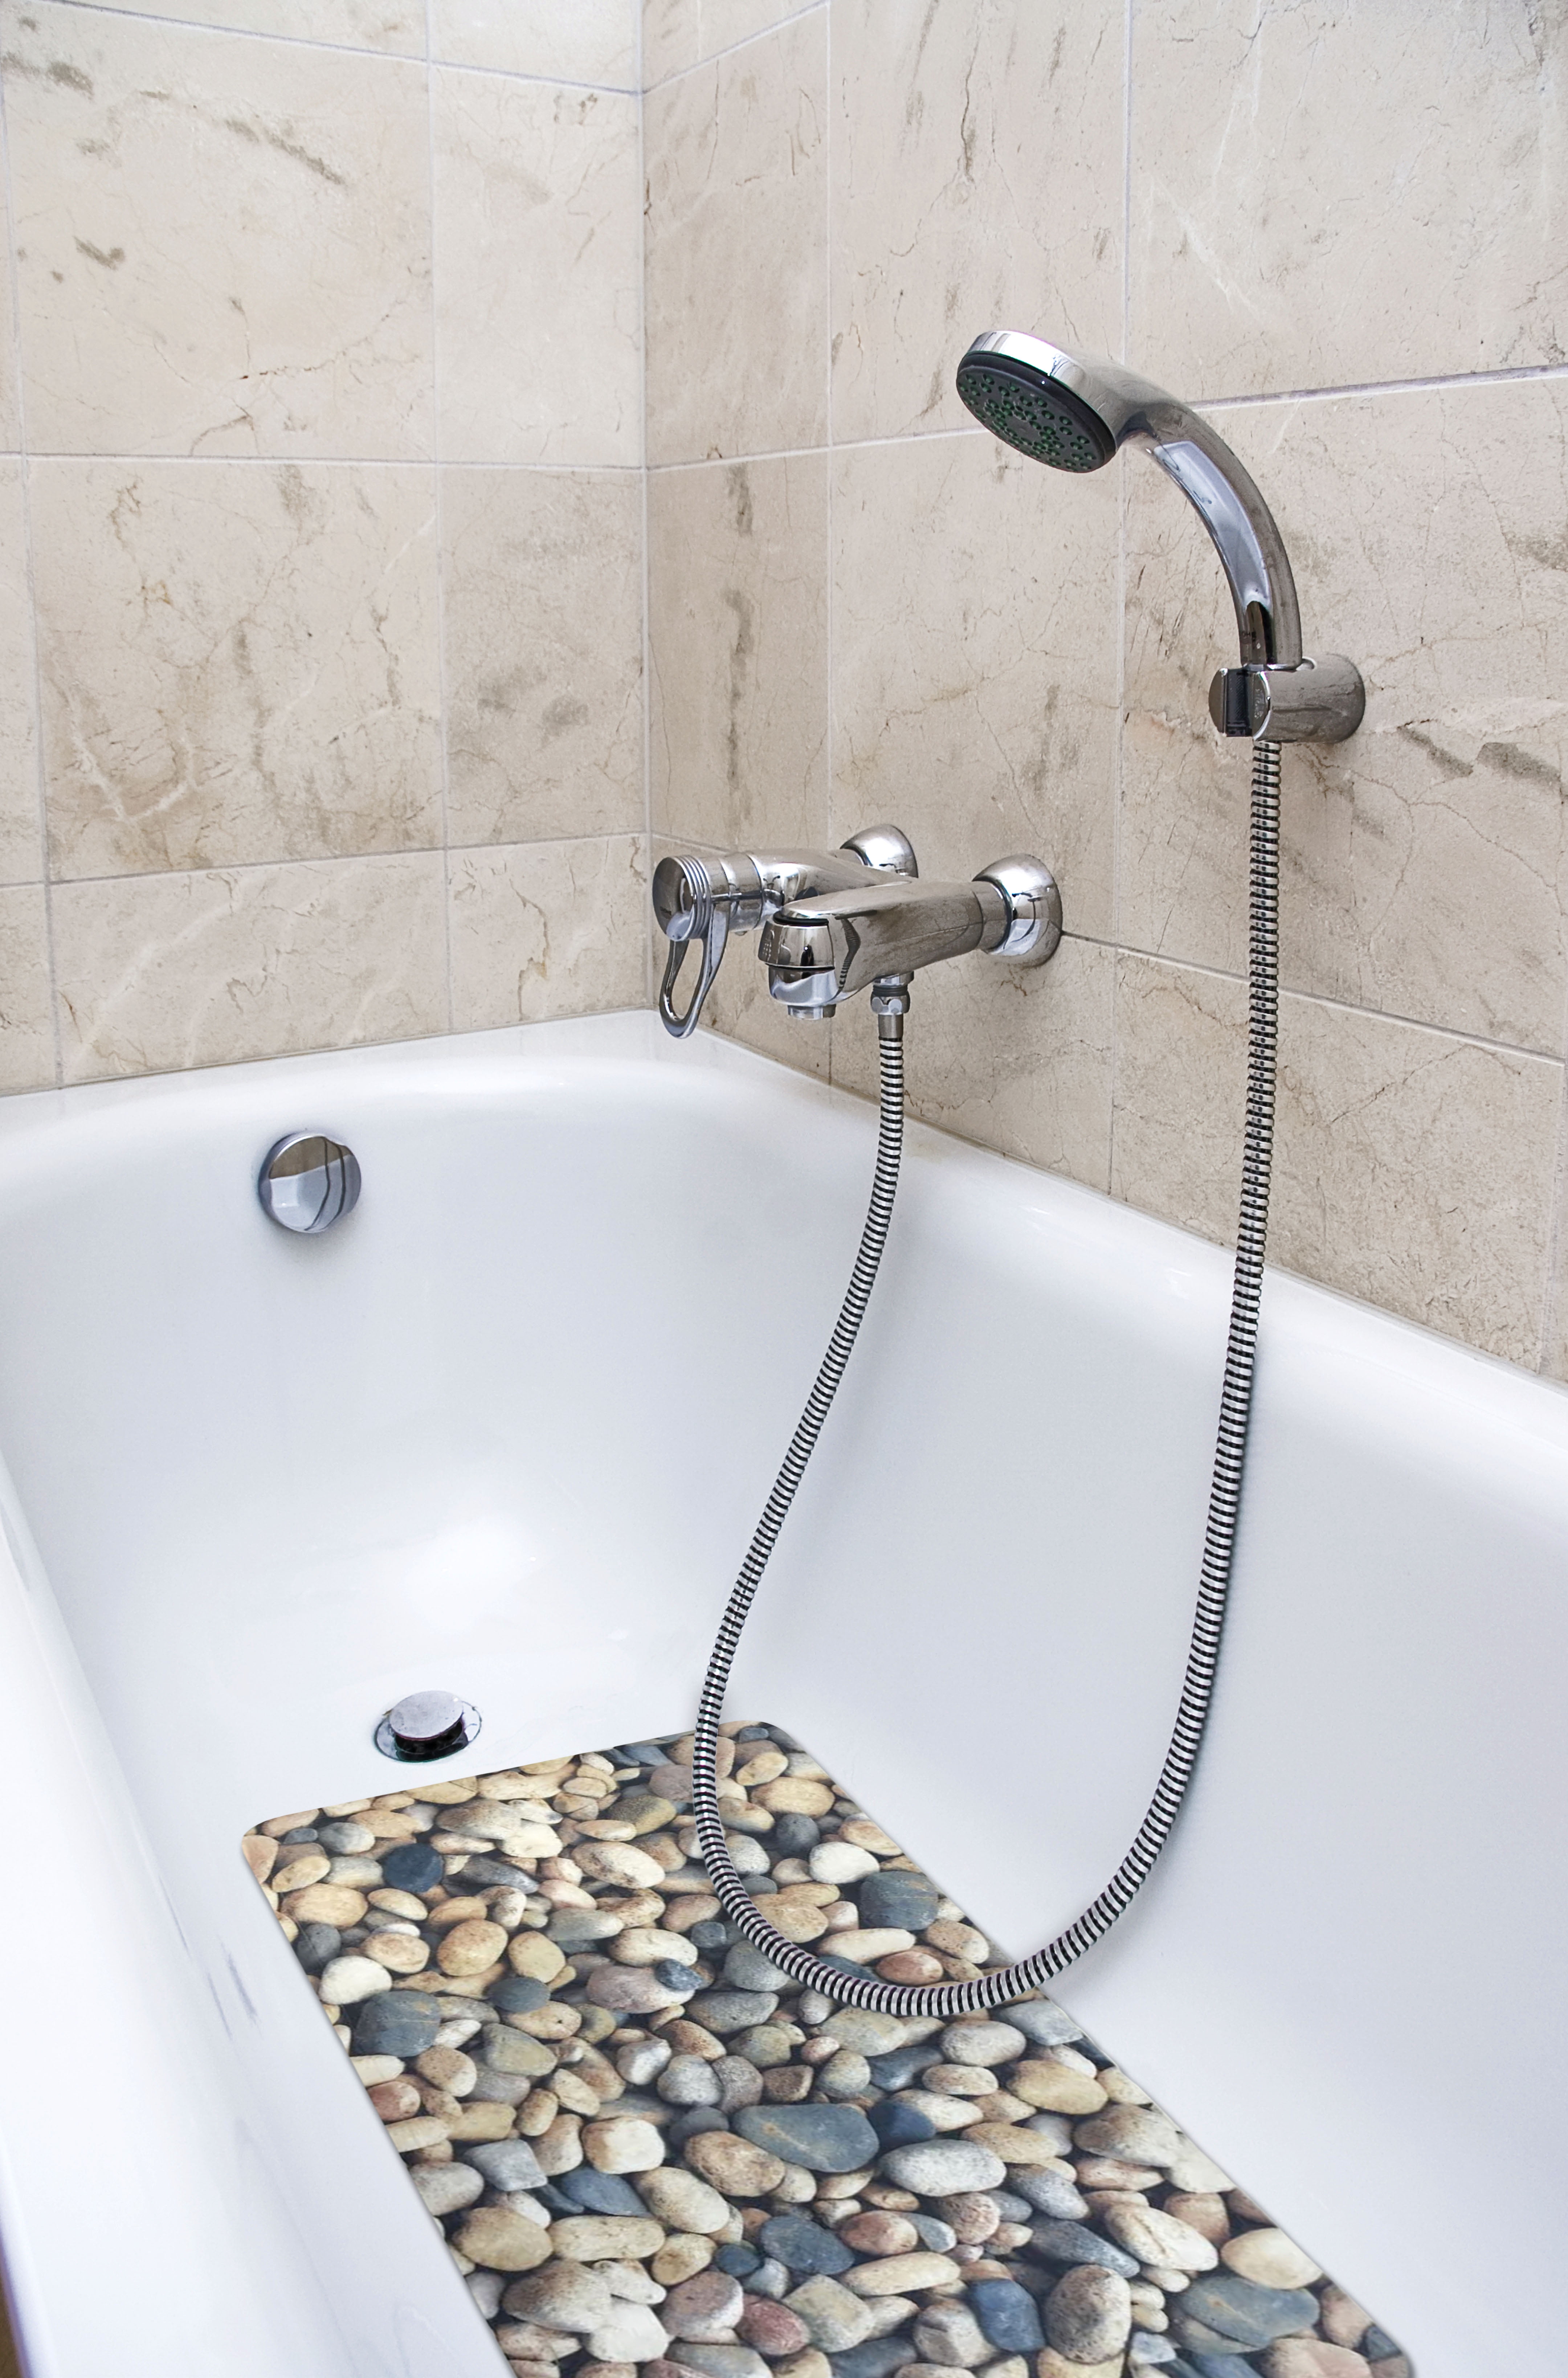 Shower Bath Mat Pebbles Extra Grip Non Slip With Suction PVC Anti Slip 